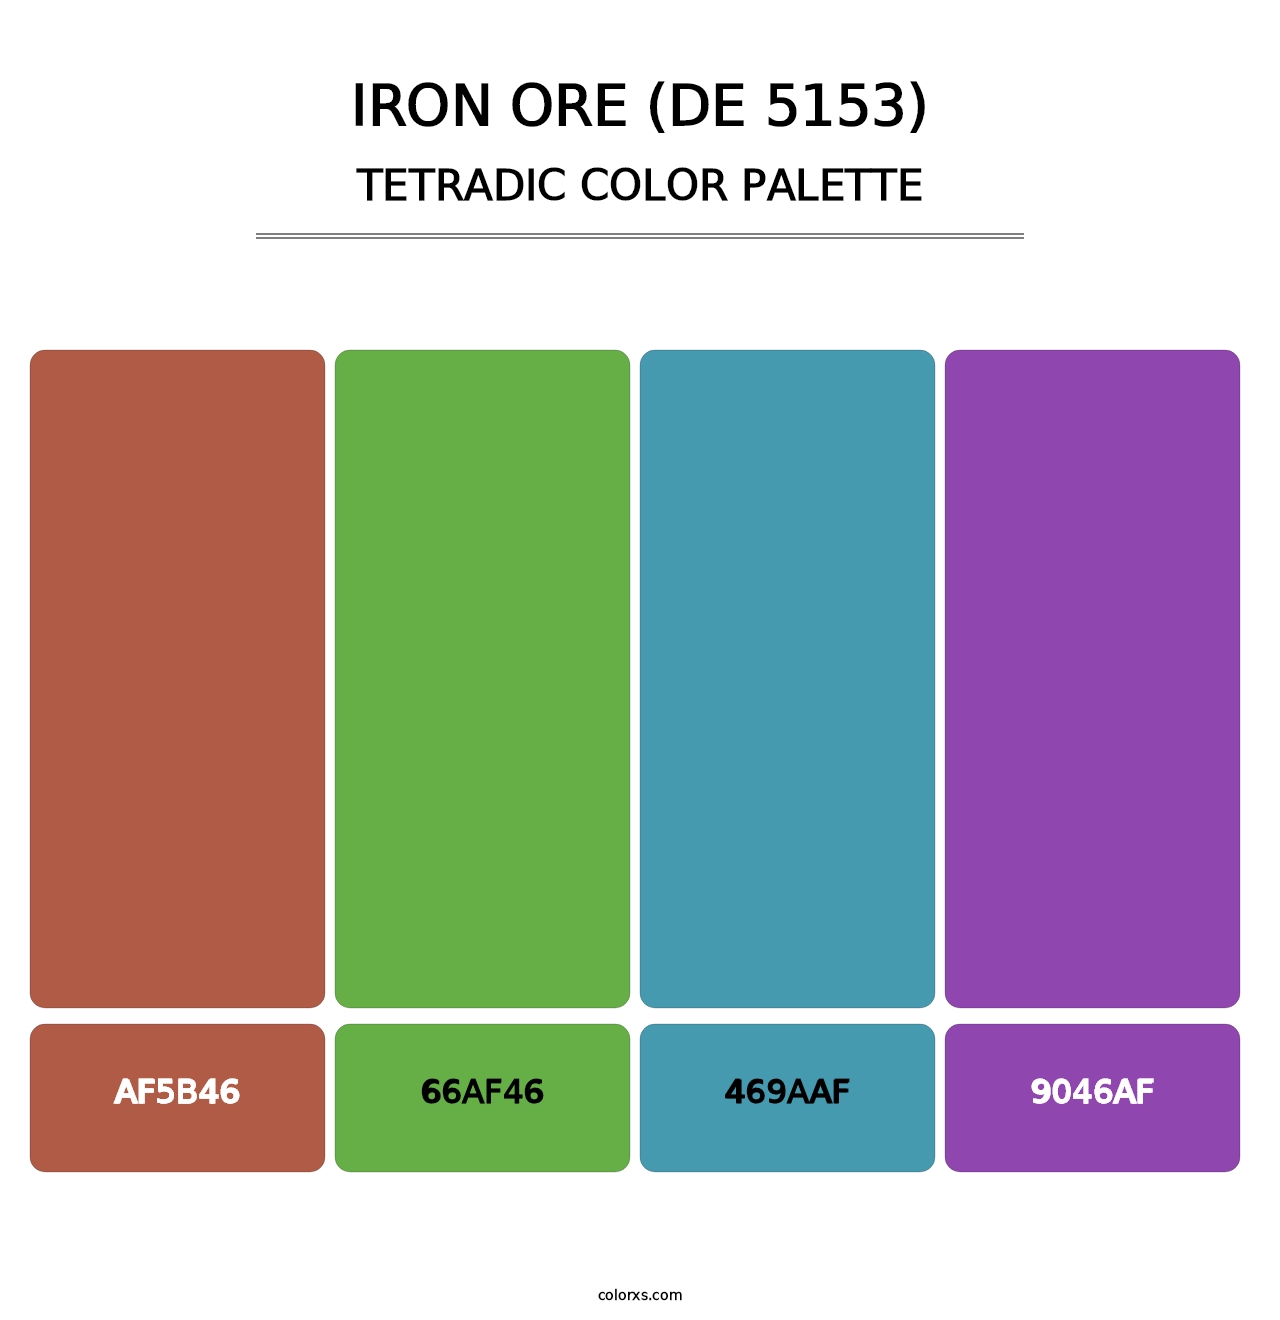 Iron Ore (DE 5153) - Tetradic Color Palette